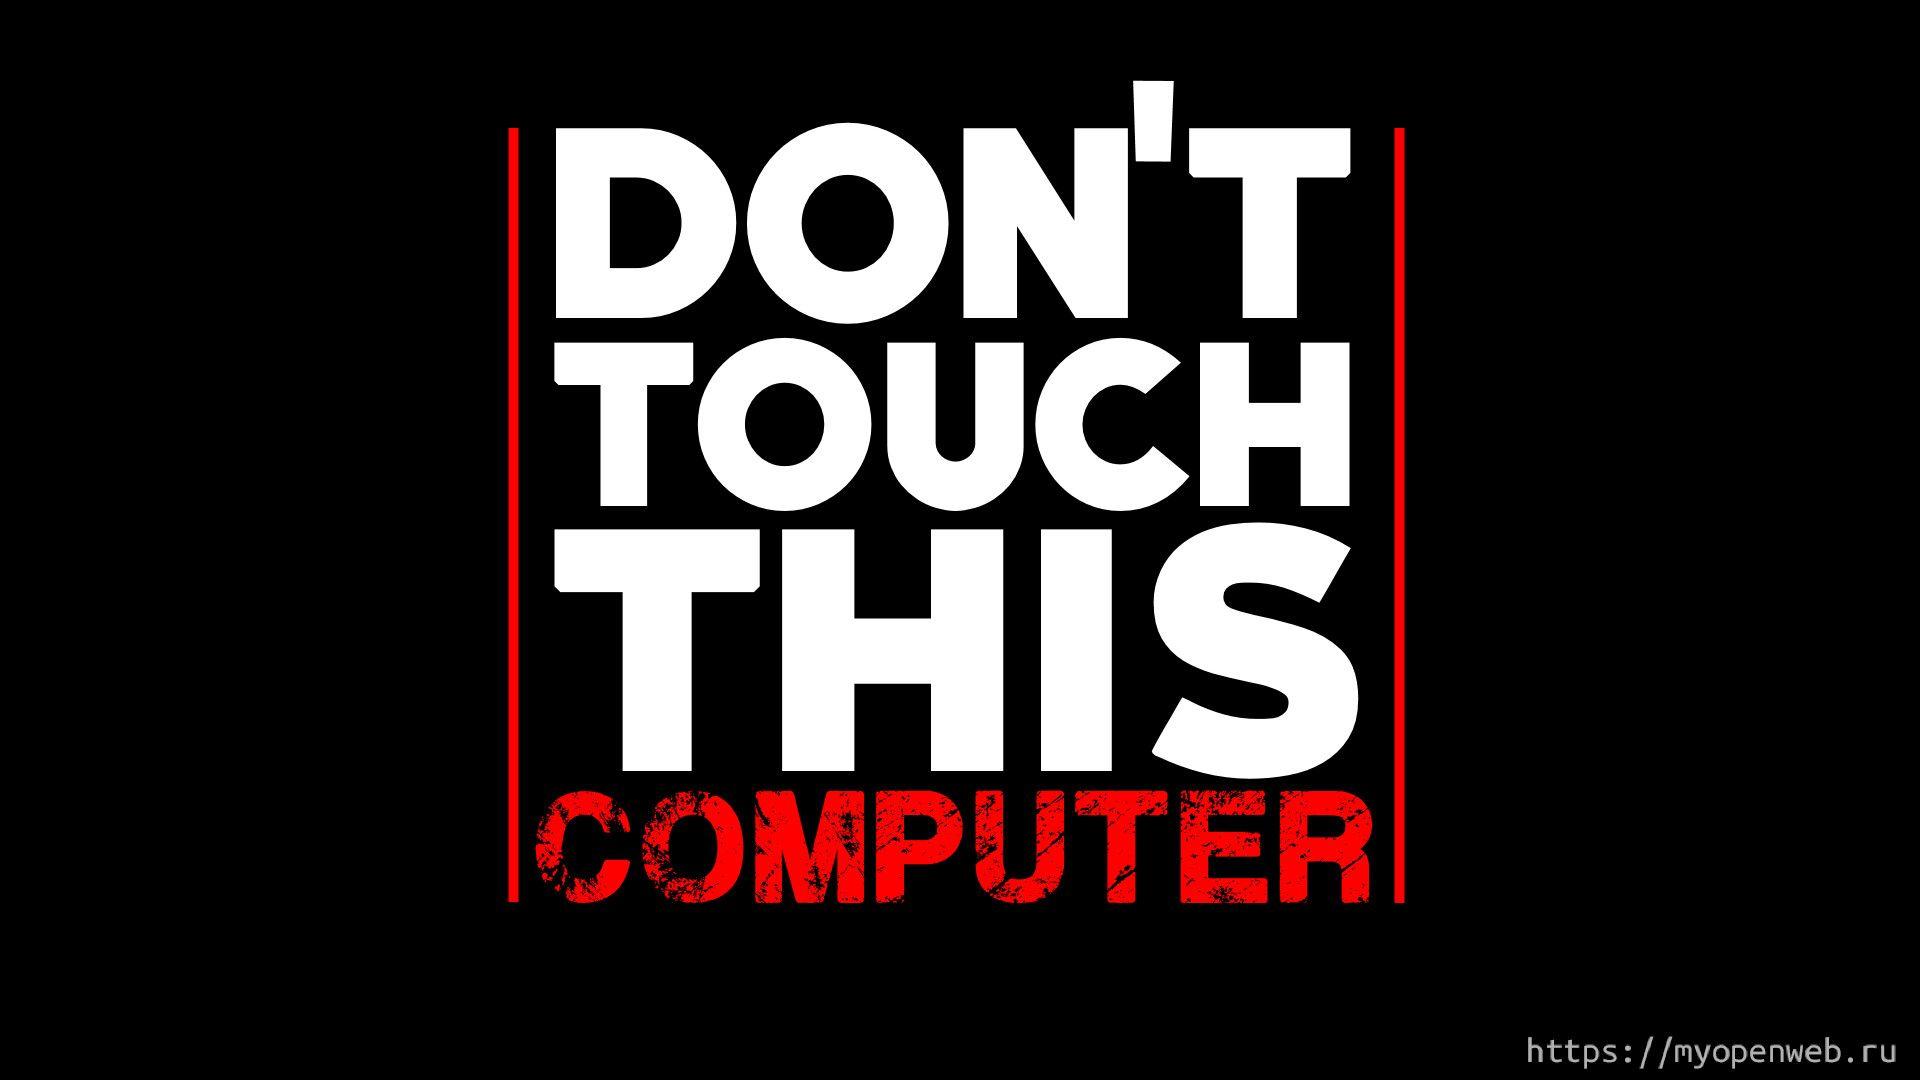 Dont Touch My PC Screensaver Downloadcom. Computer wallpaper, Dont touch my phone wallpaper, Computer wallpaper hd